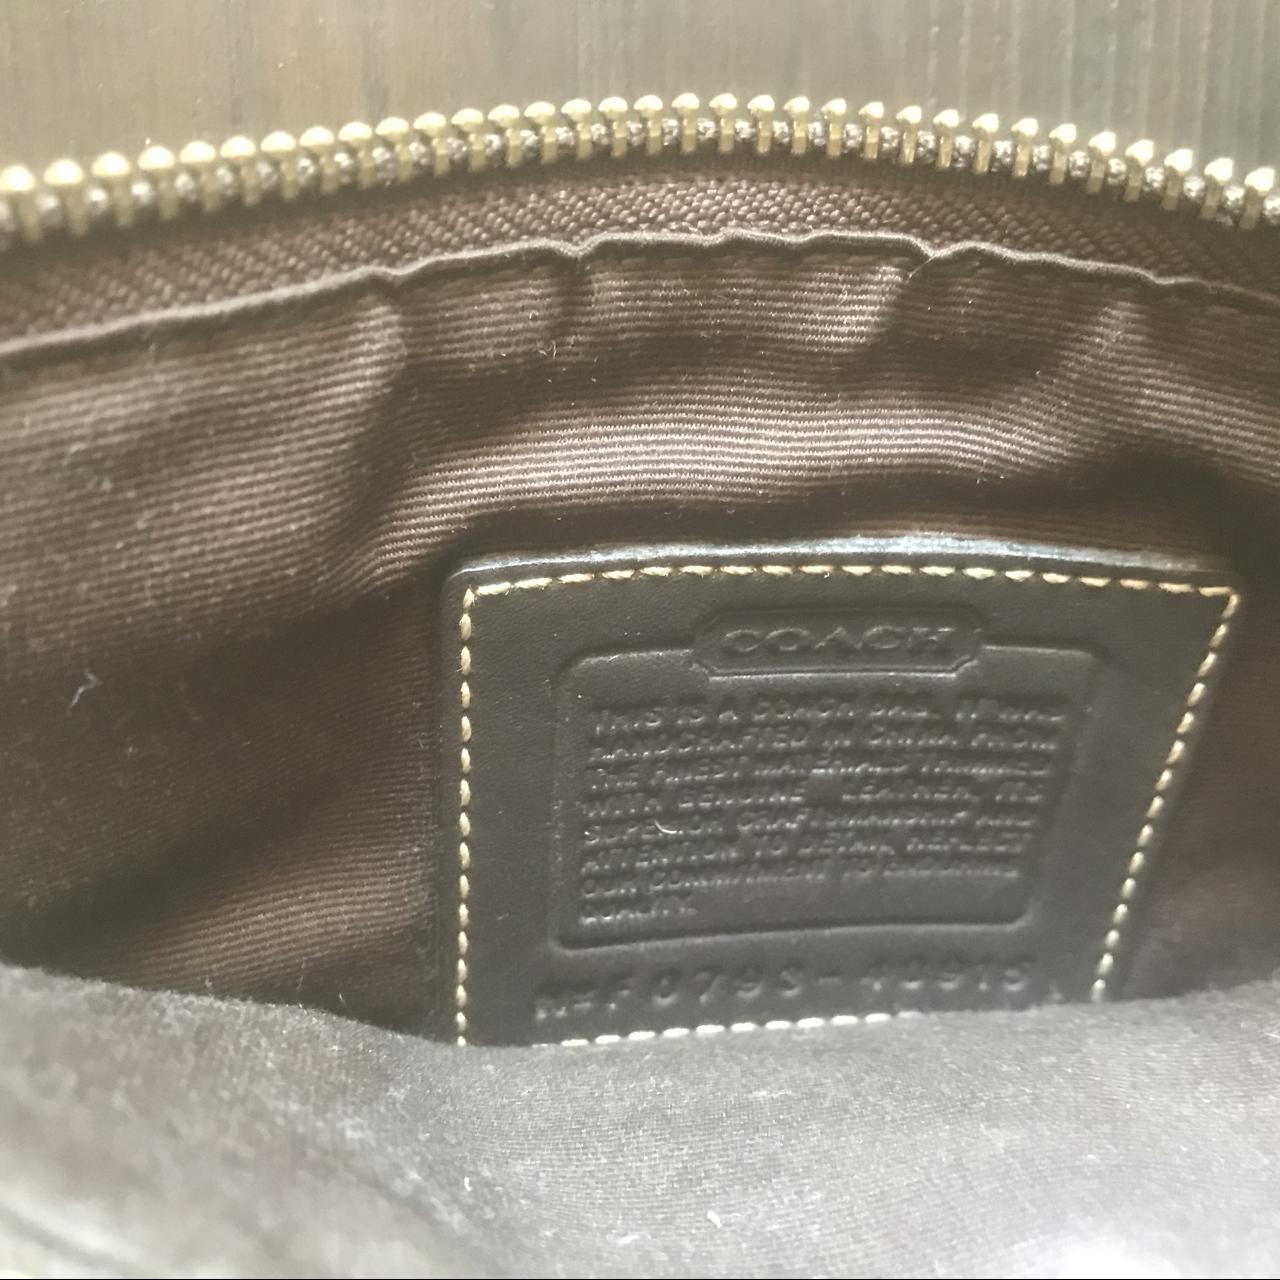 Authentic Coach sling bag